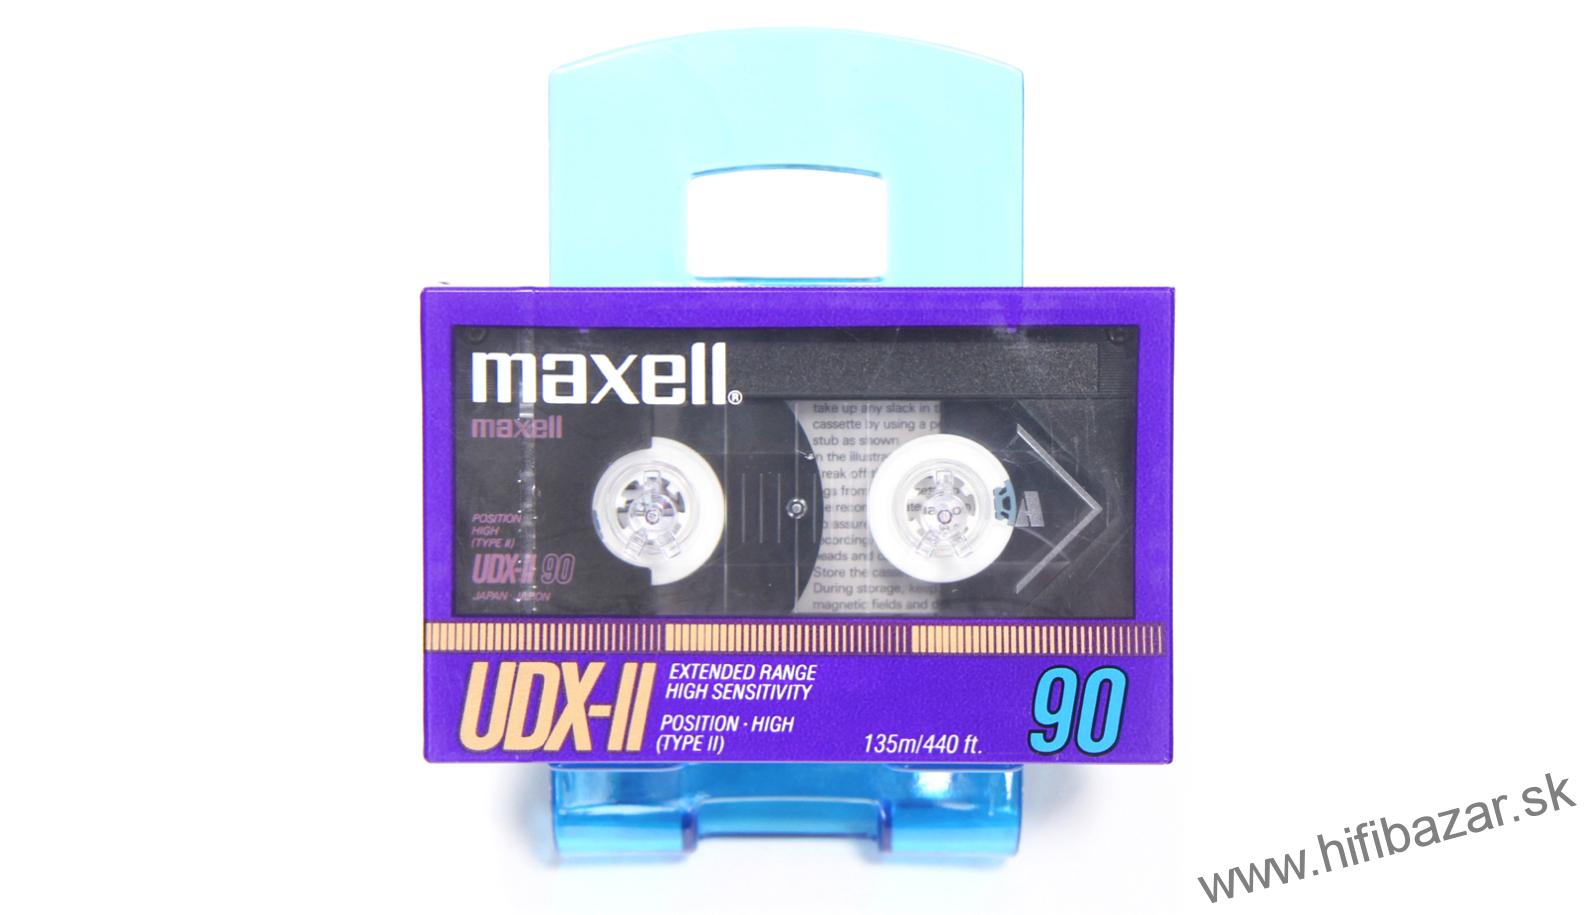 MAXELL UDX-II90 Position Chrome